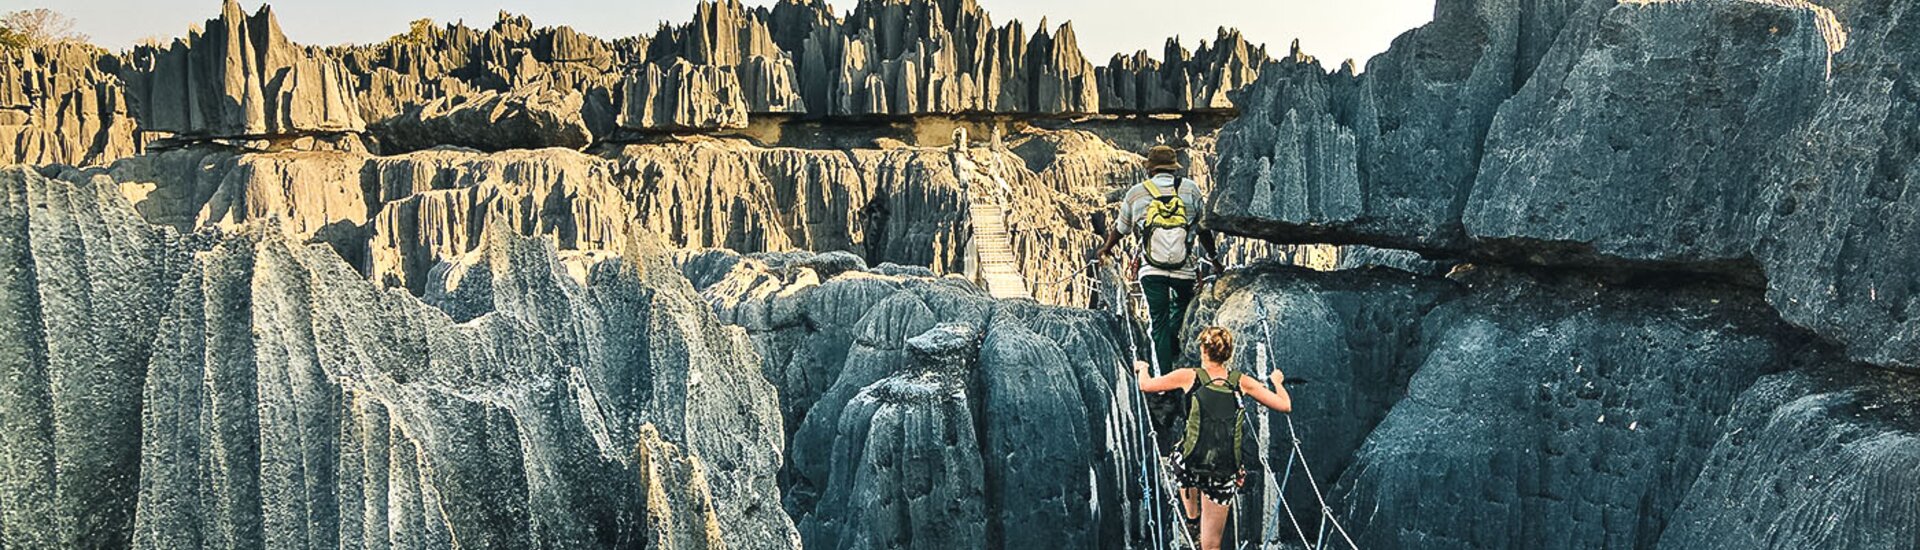 Reisende auf einer Hängebrücke im Nationalpark Tsingy de Bemaraha in Madagaskar